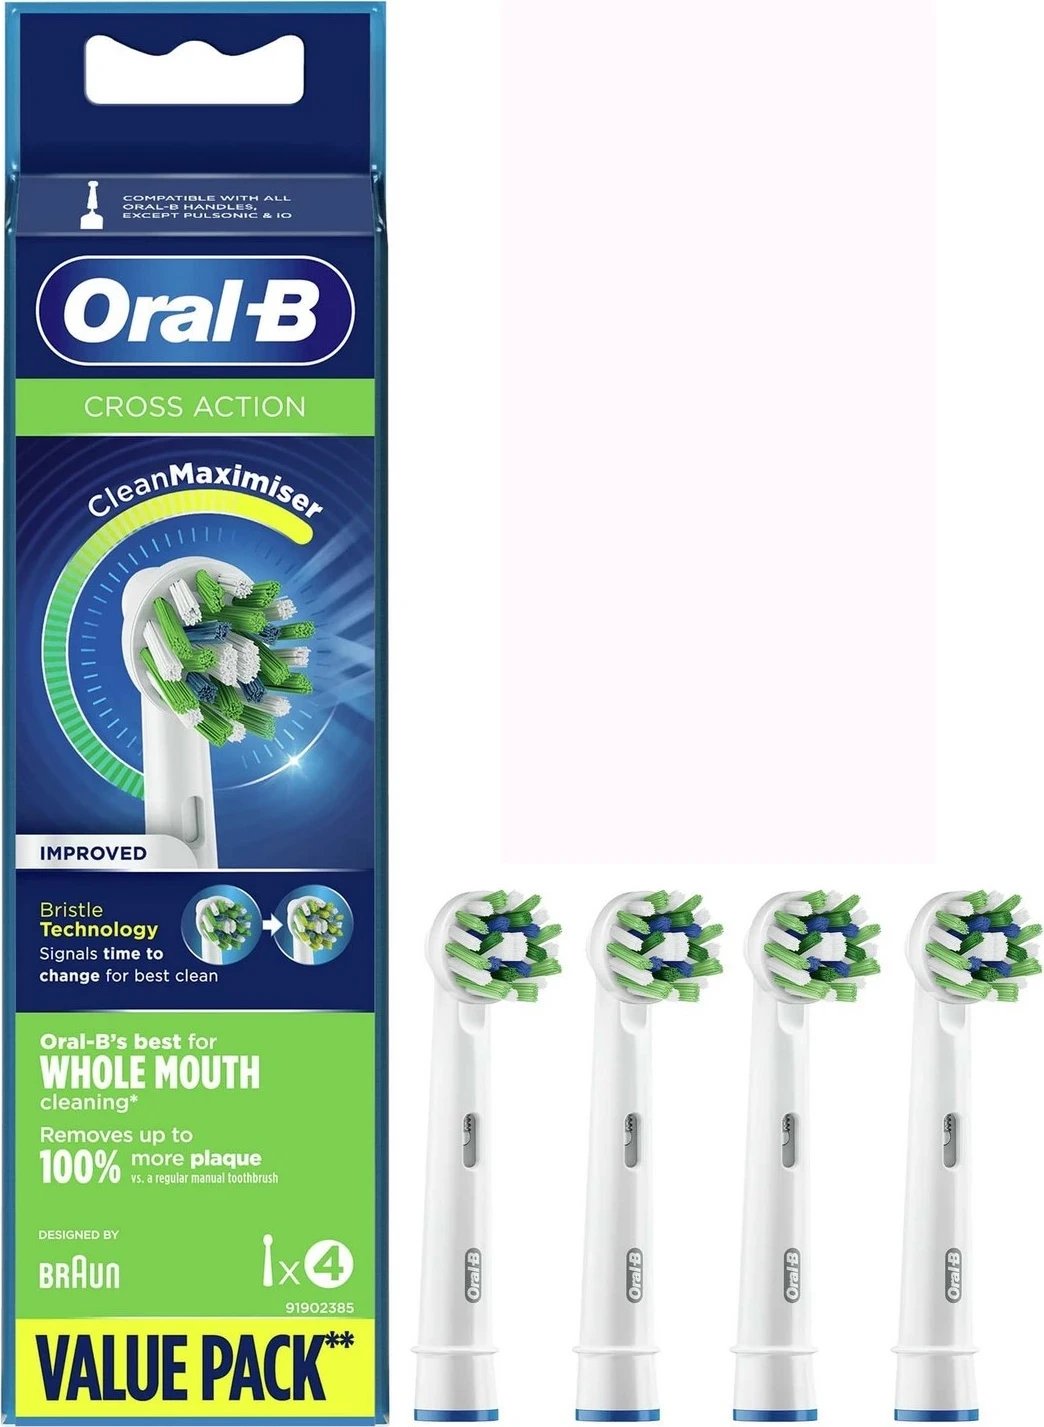 Koka furçe dhëmbësh Oral-B, CrossAct EB50-4 N, e bardhë